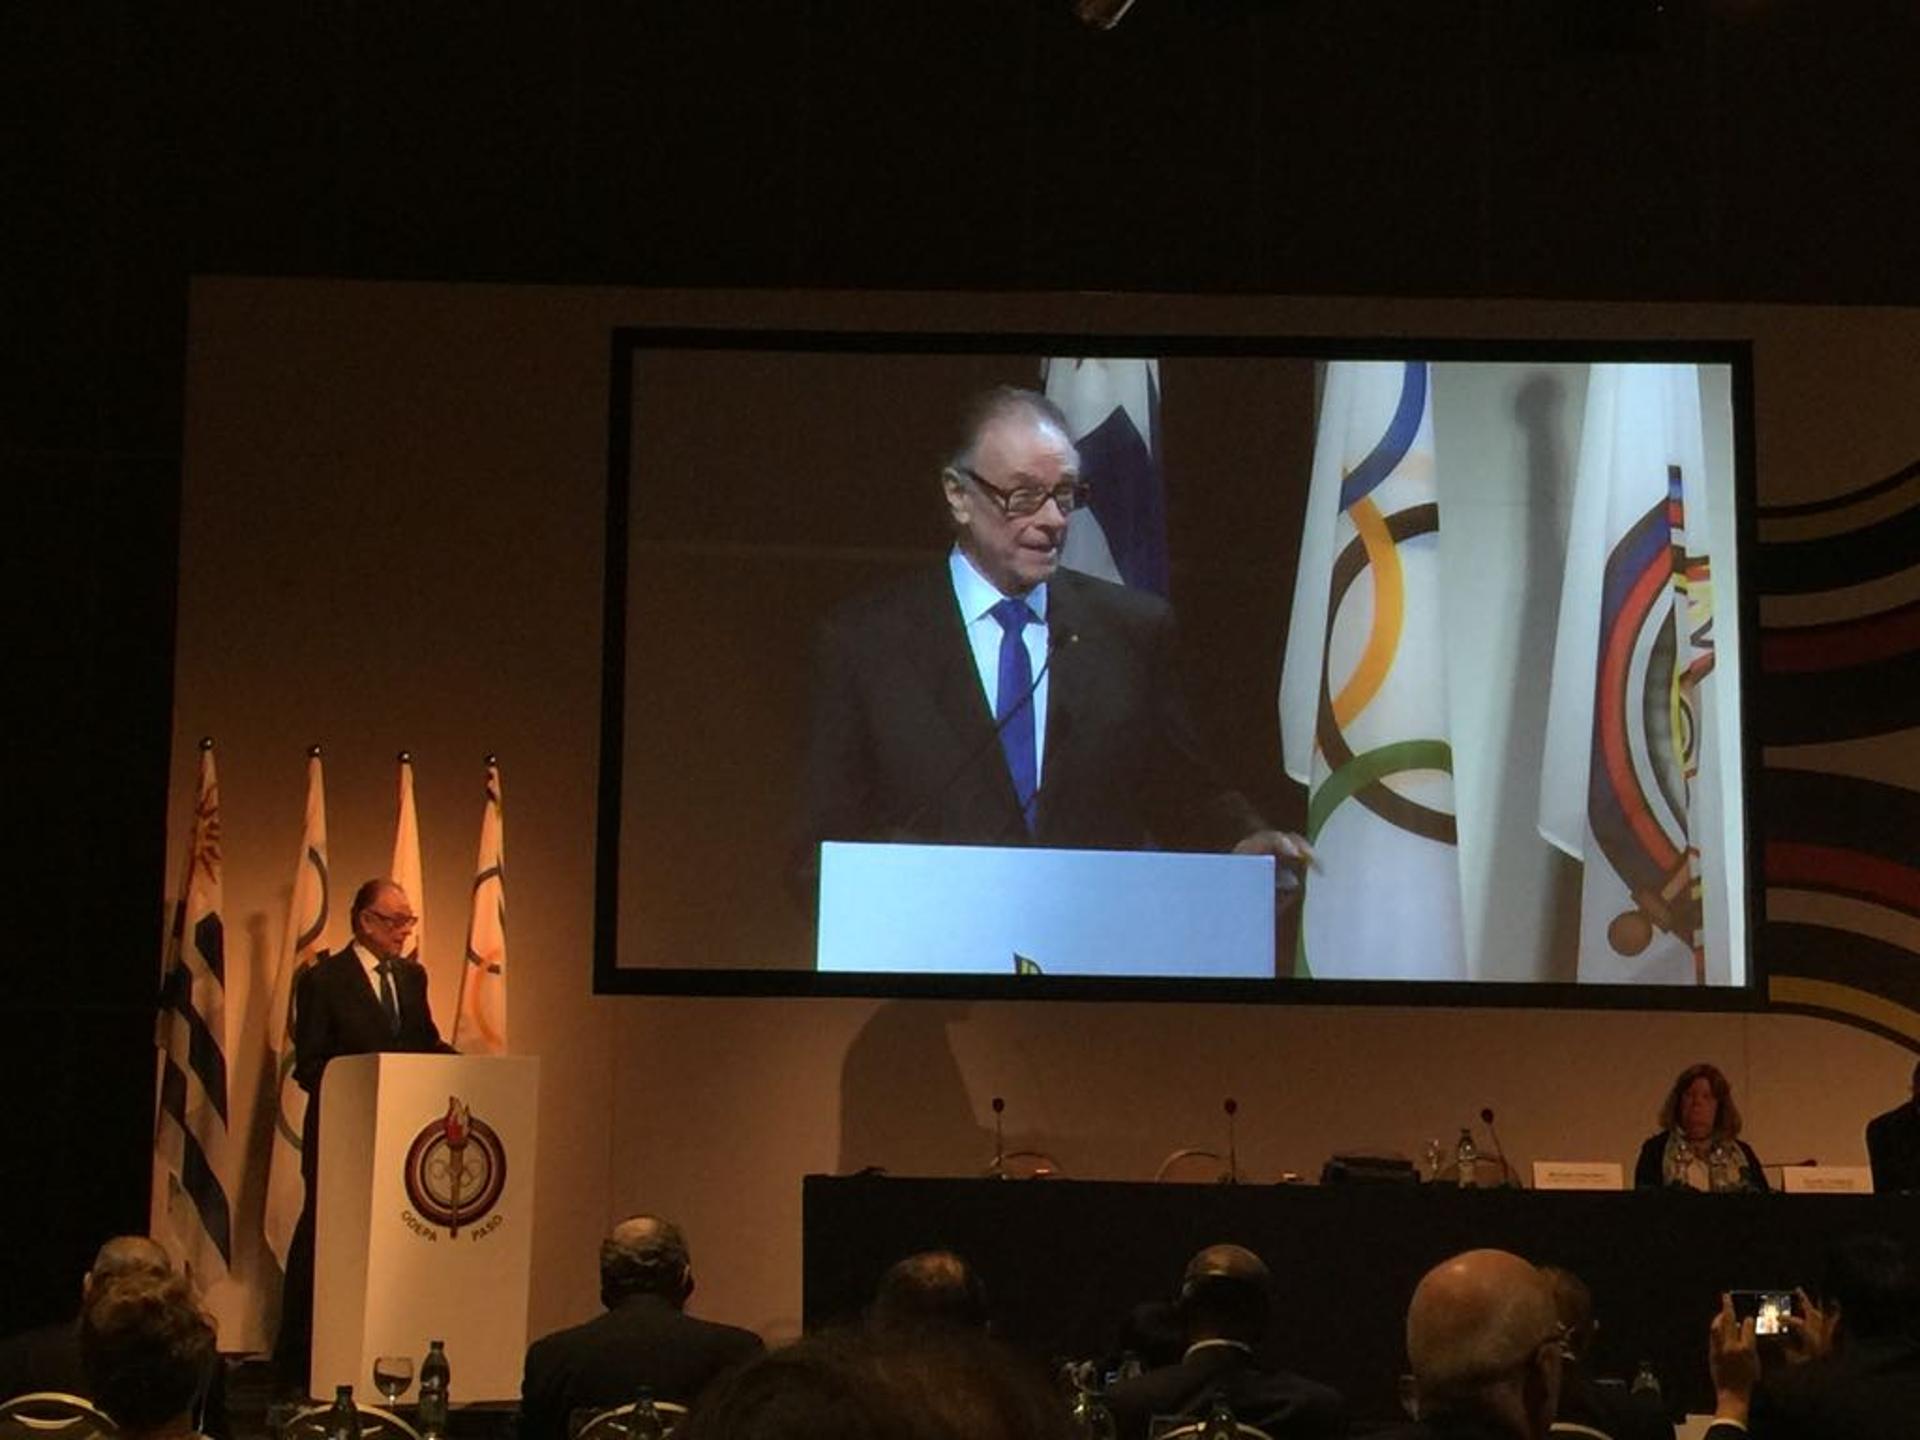 Carlos Arthur Nuzman discursa na Assembleia da Odepa